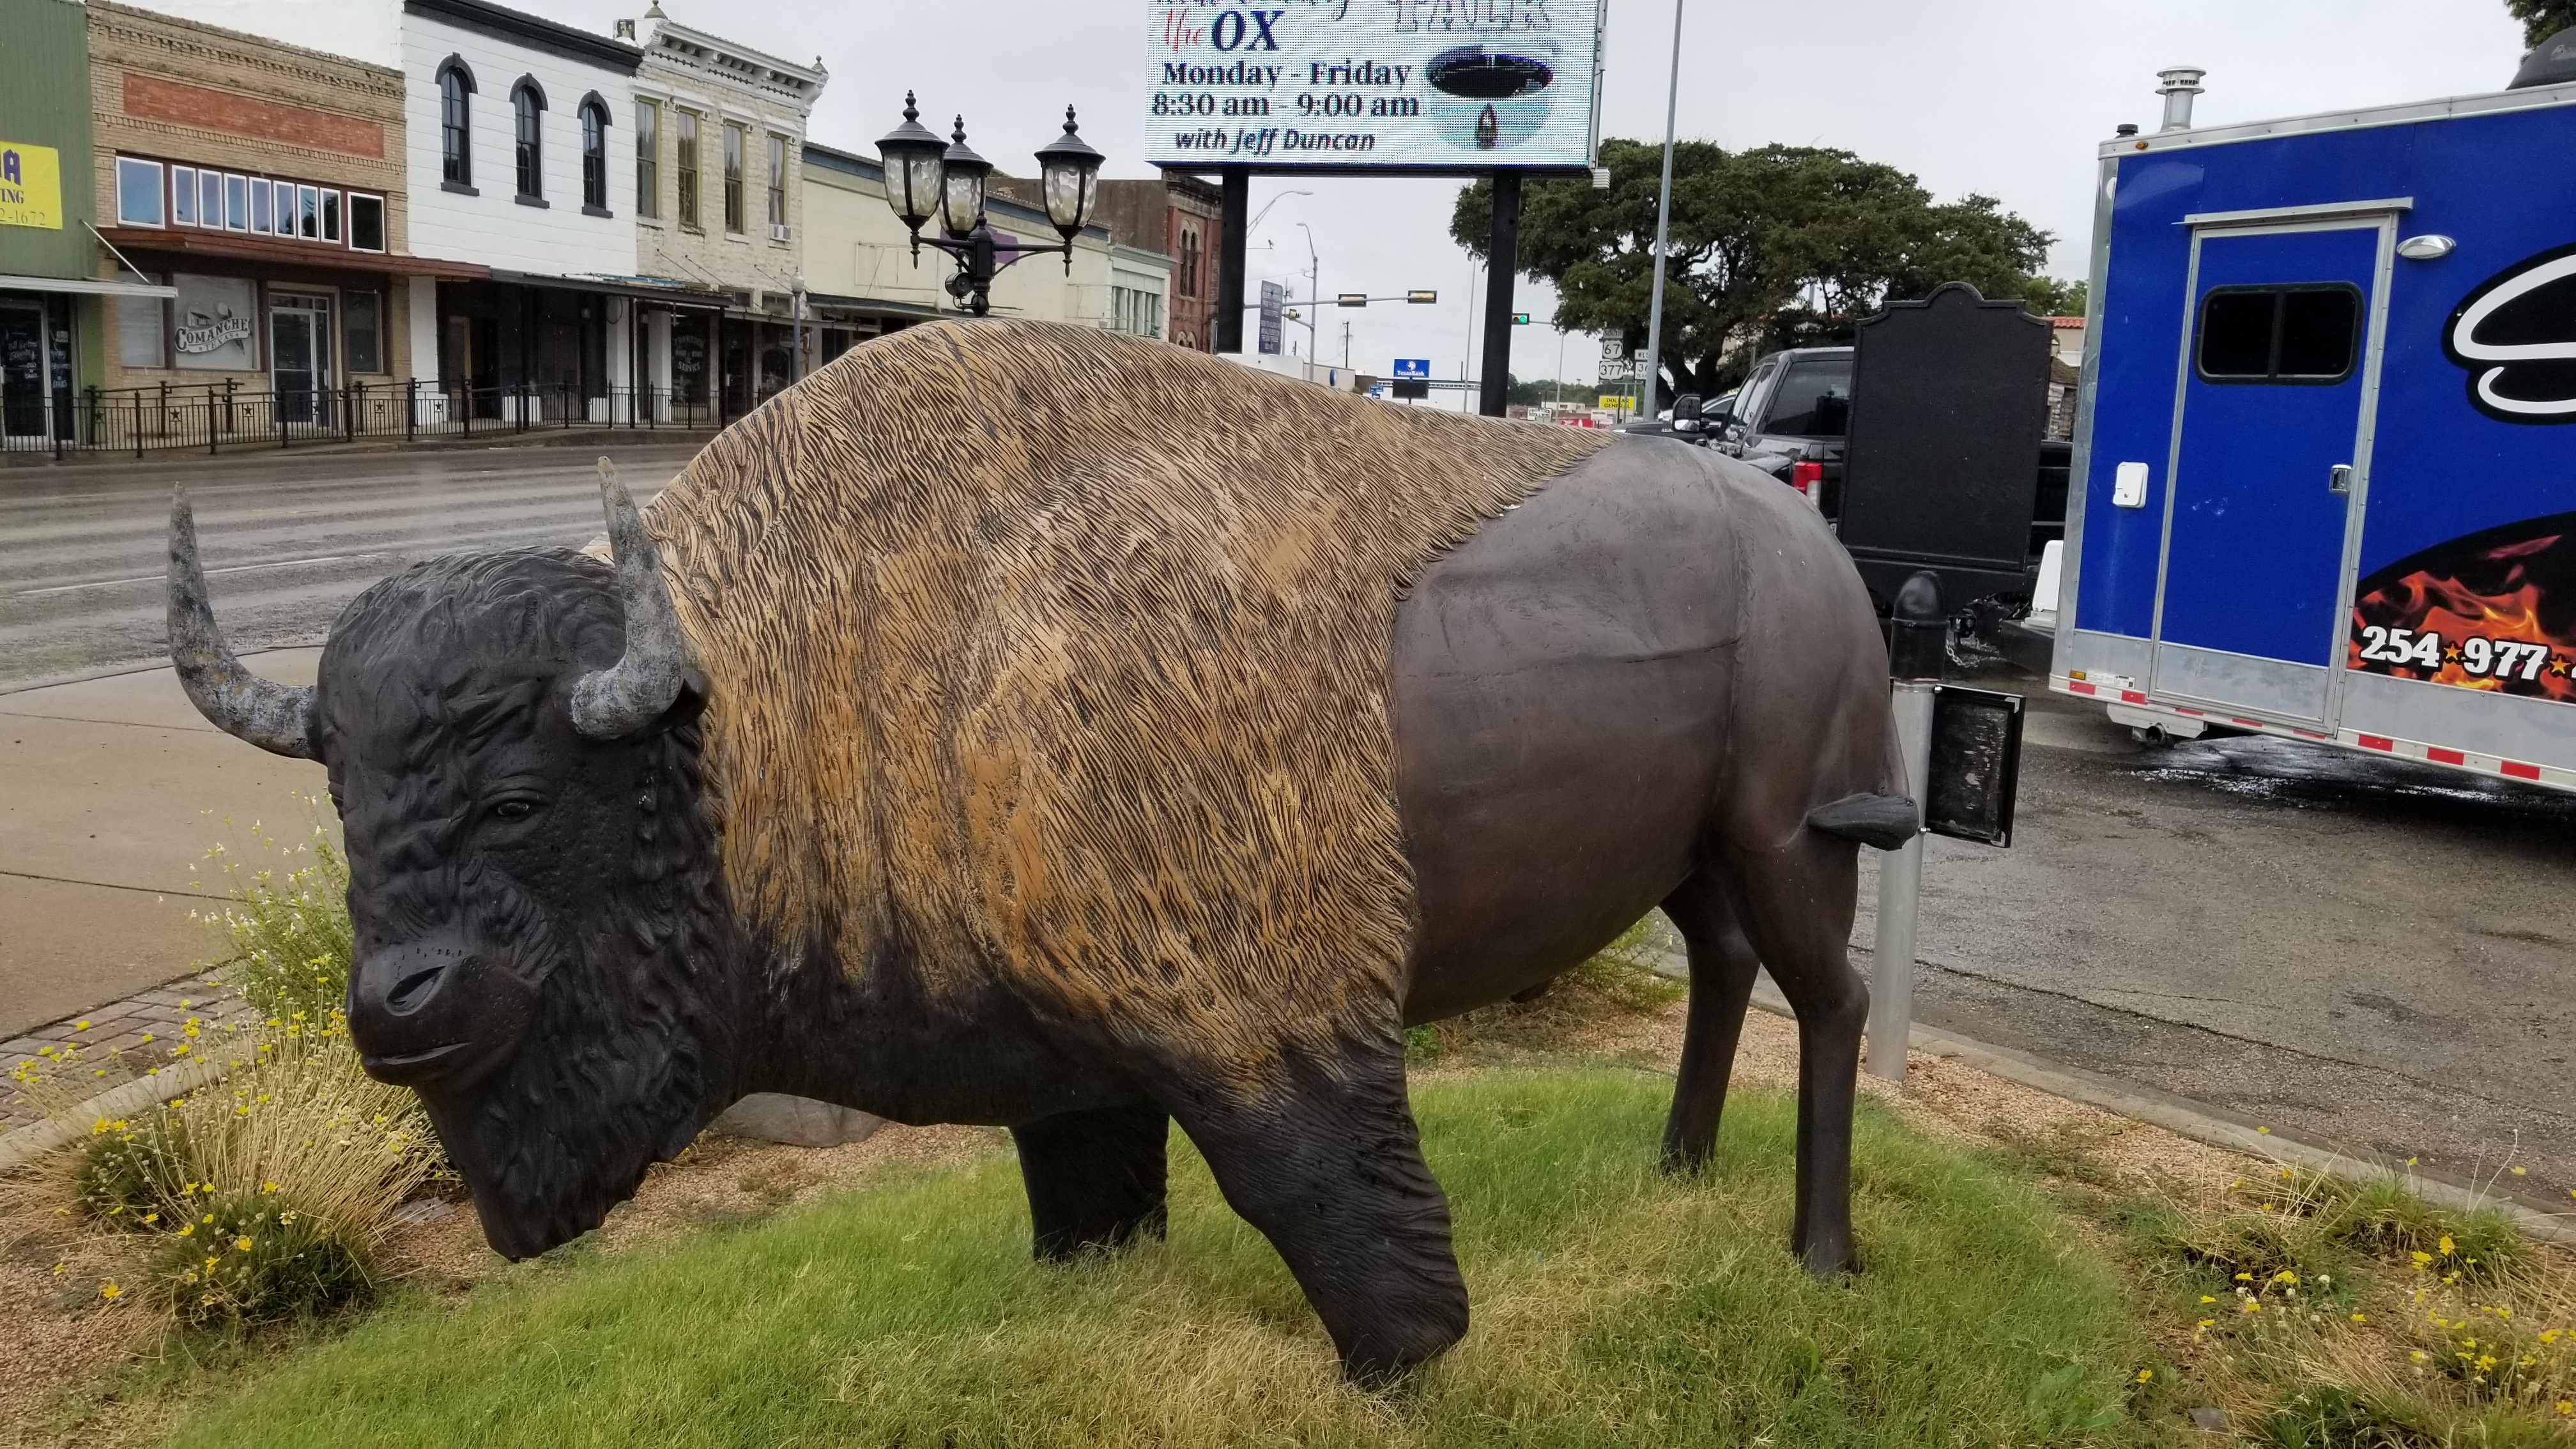 The Bison (American Buffalo) artwork